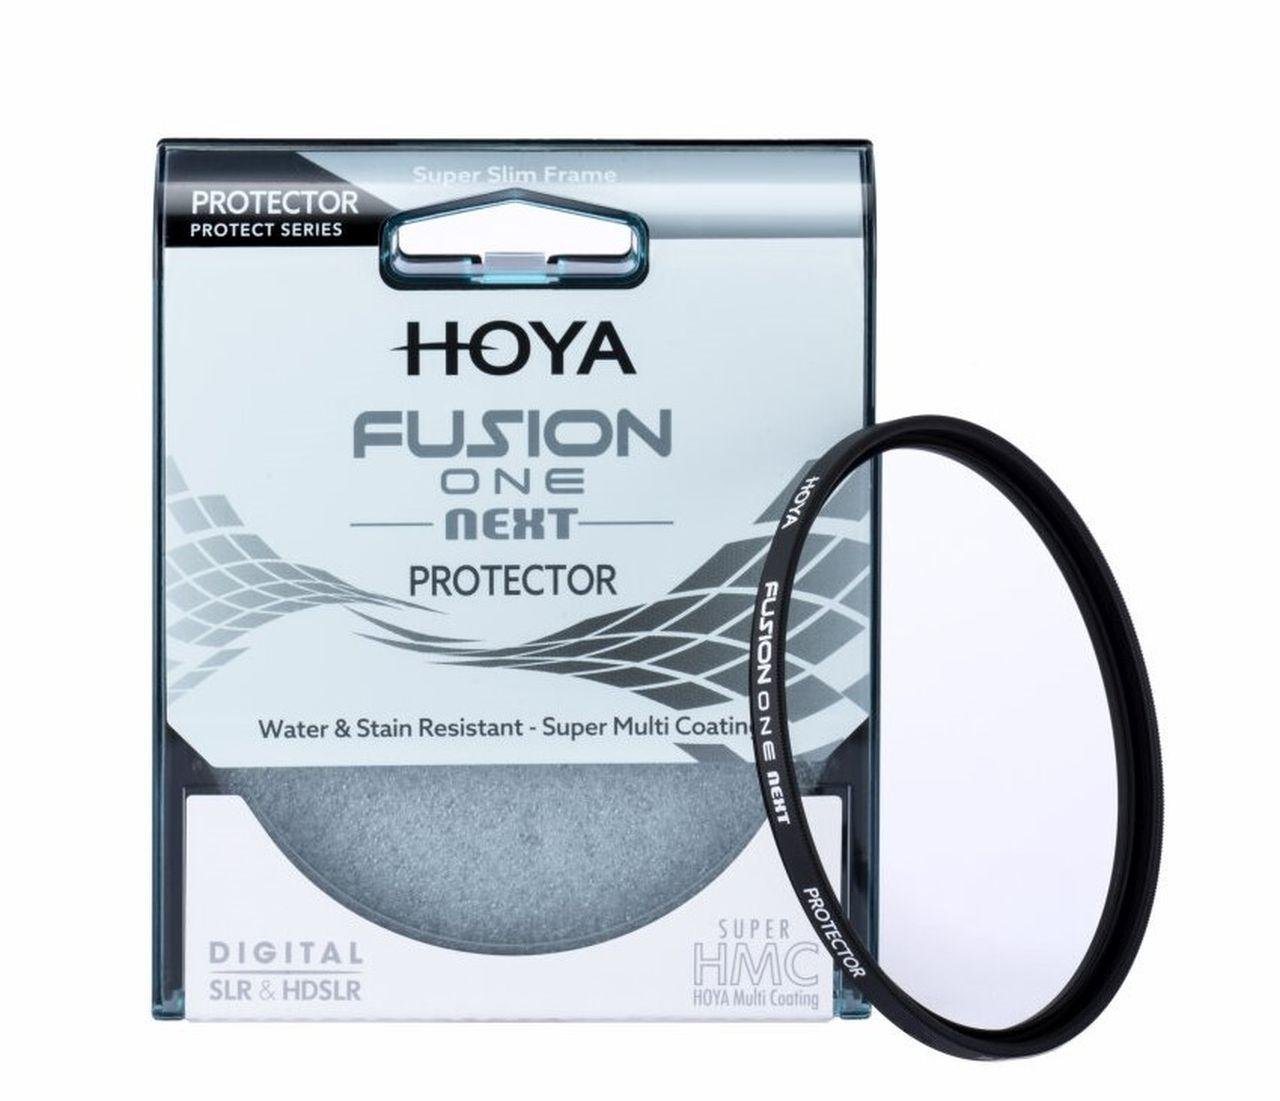 Hoya Fusion ONE Next Protector 46mm Objektivzubehör von Hoya